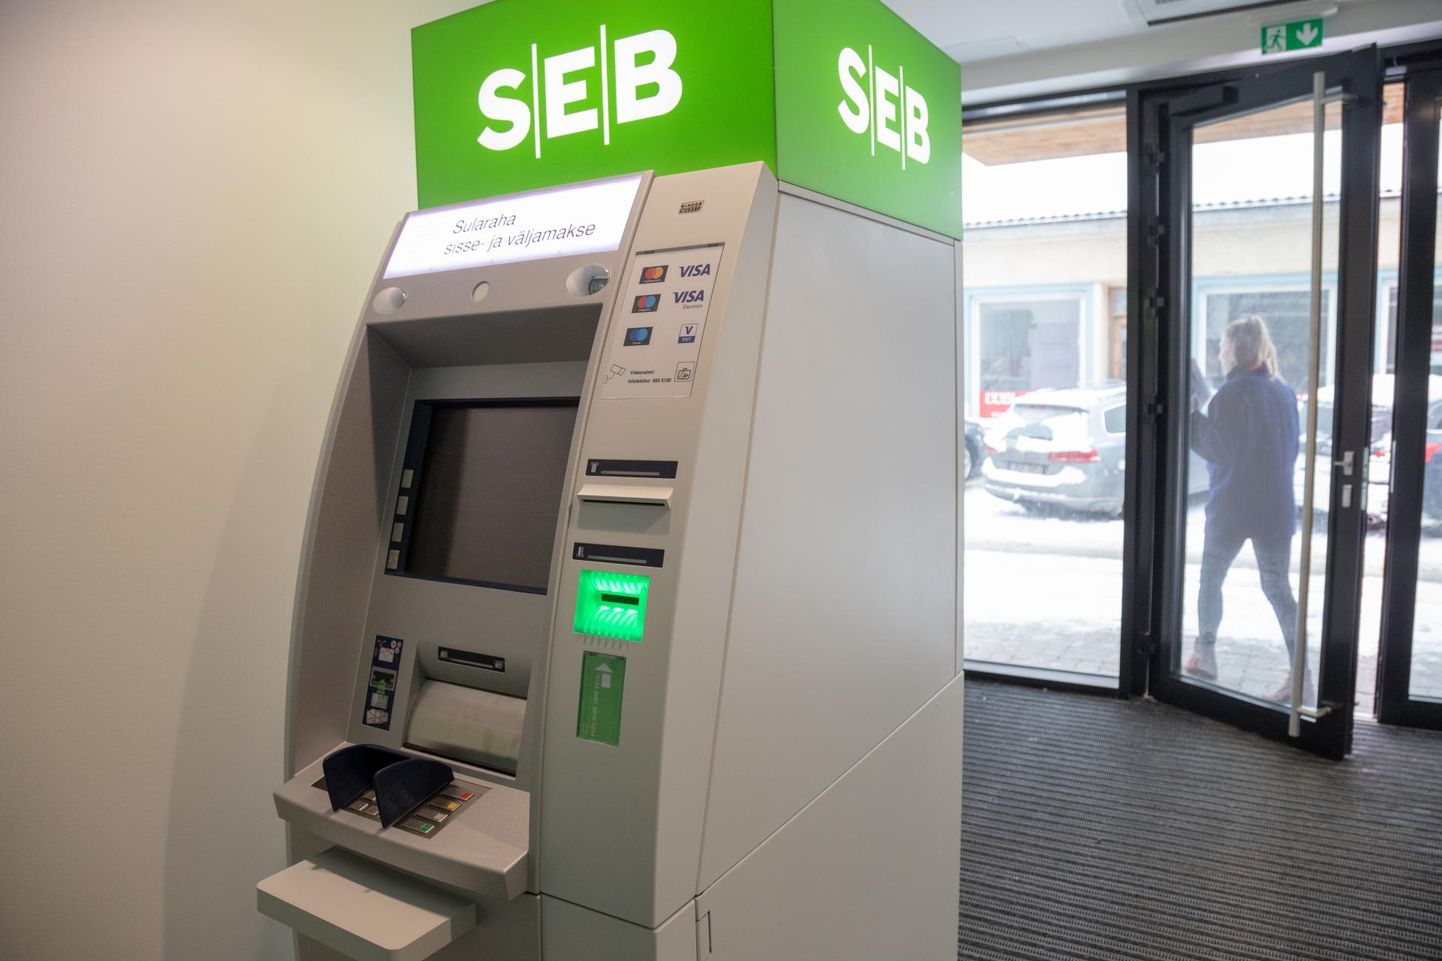 SEB pangaautomaat.